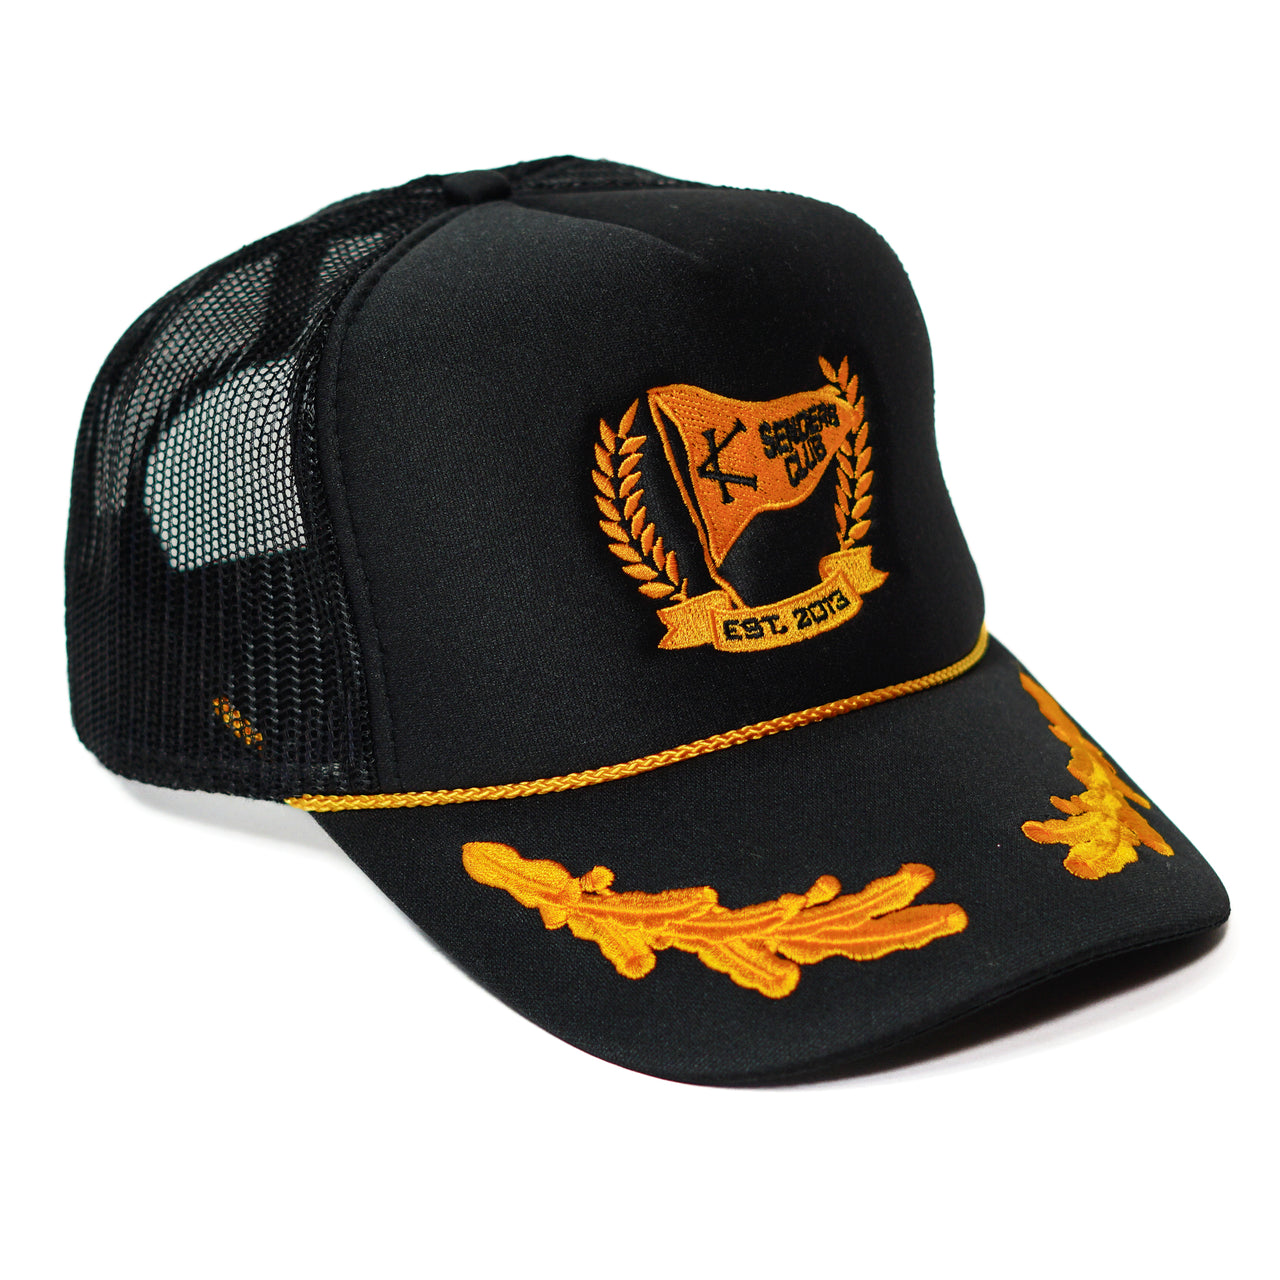 Senders Club Trucker Hat Limited Edition